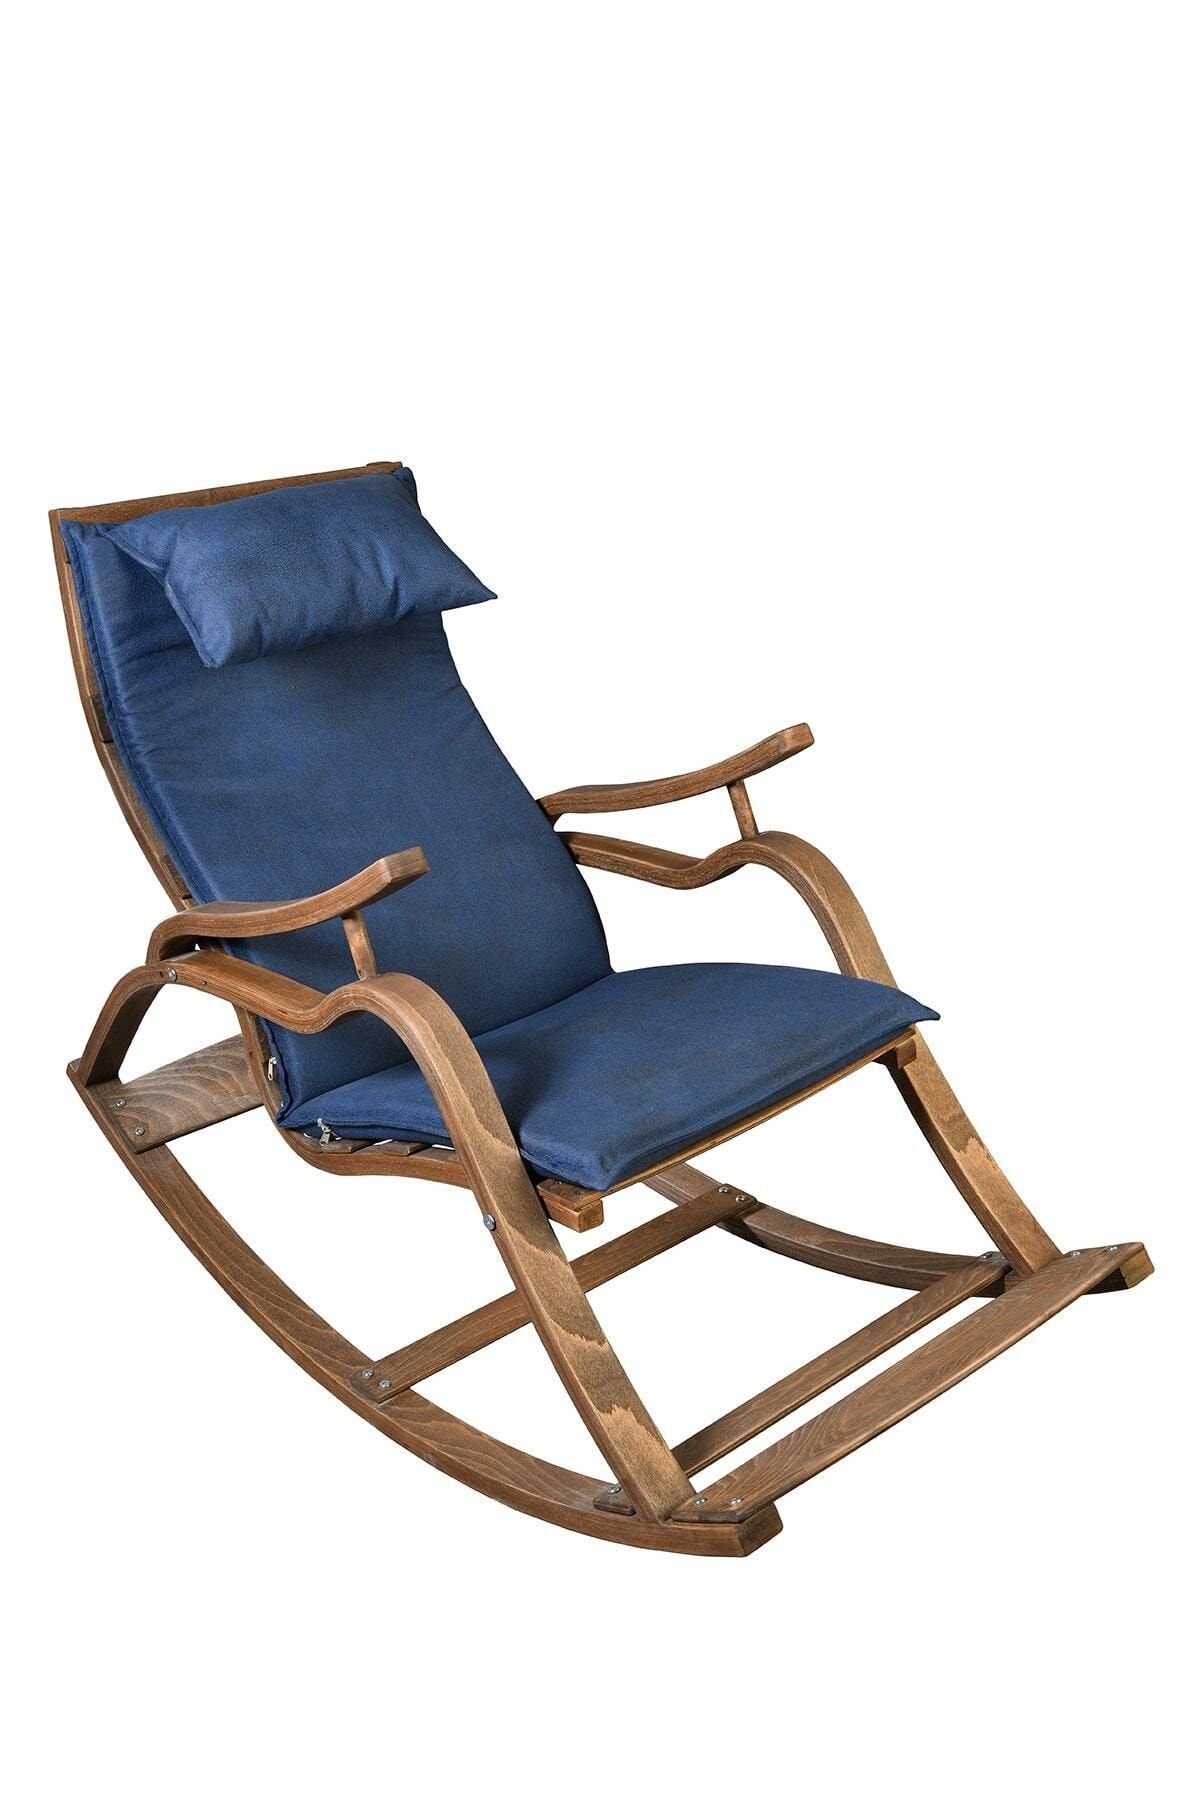 Aeka Ae-5002 Marmara Sallanan Sandalye Lacivert Minderli Ceviz Rengi Dinlenme Sandalyesi